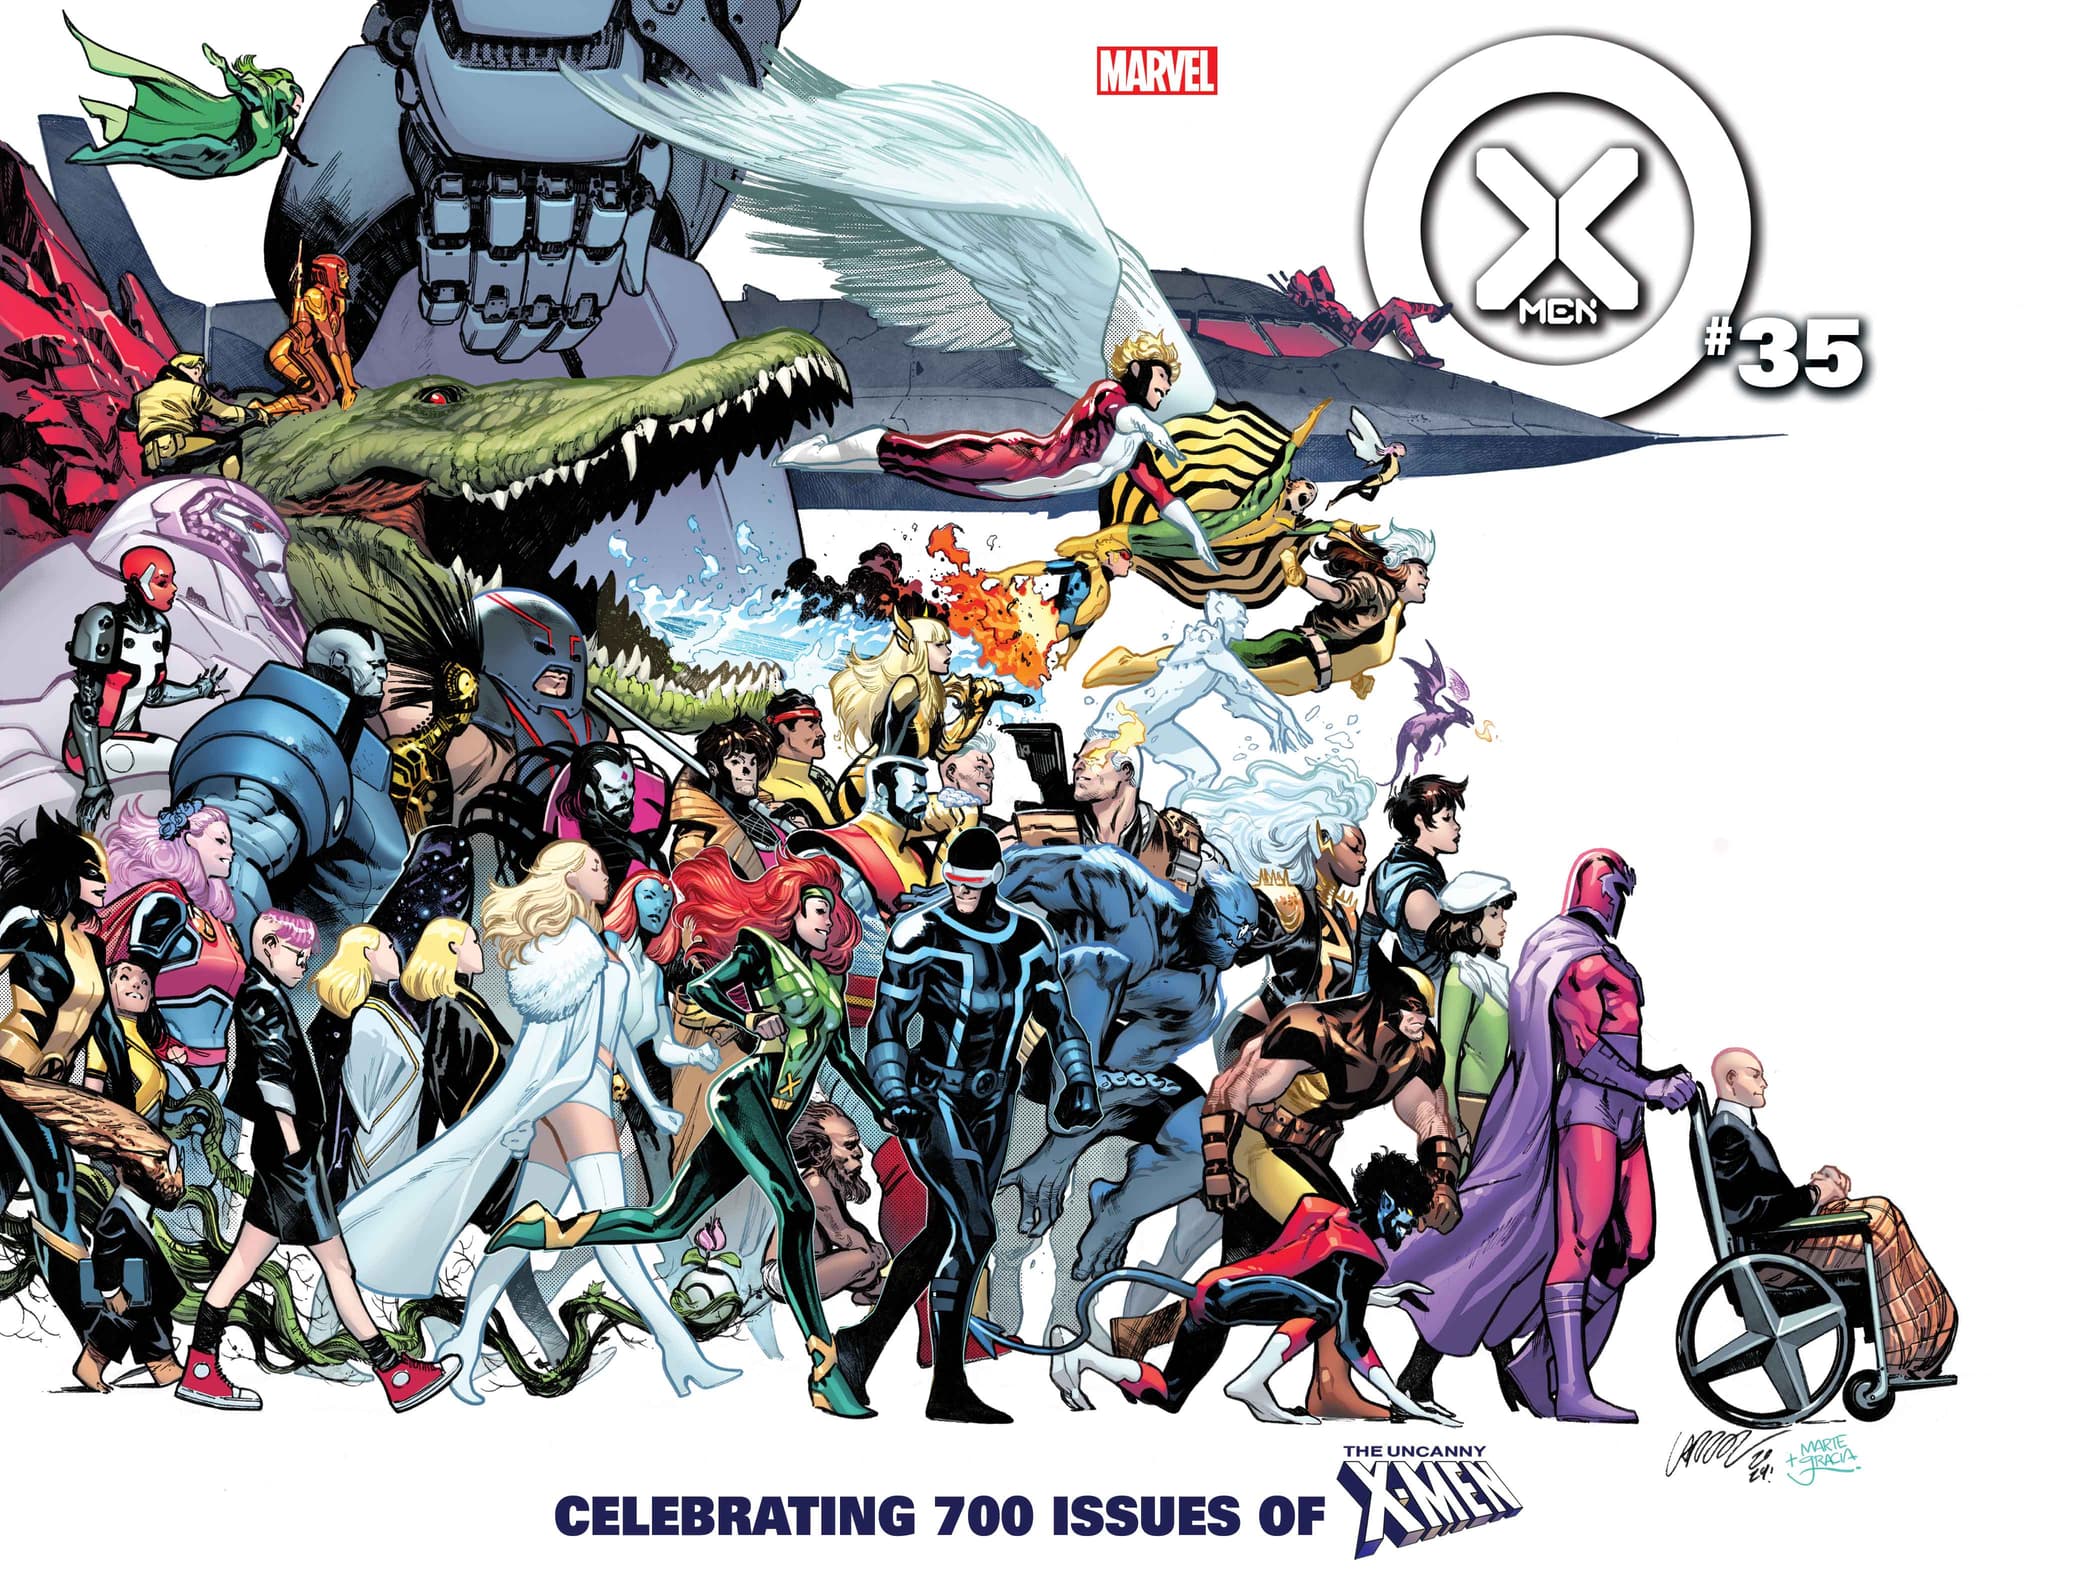 X-Men #35 (Legacy #700) cover art